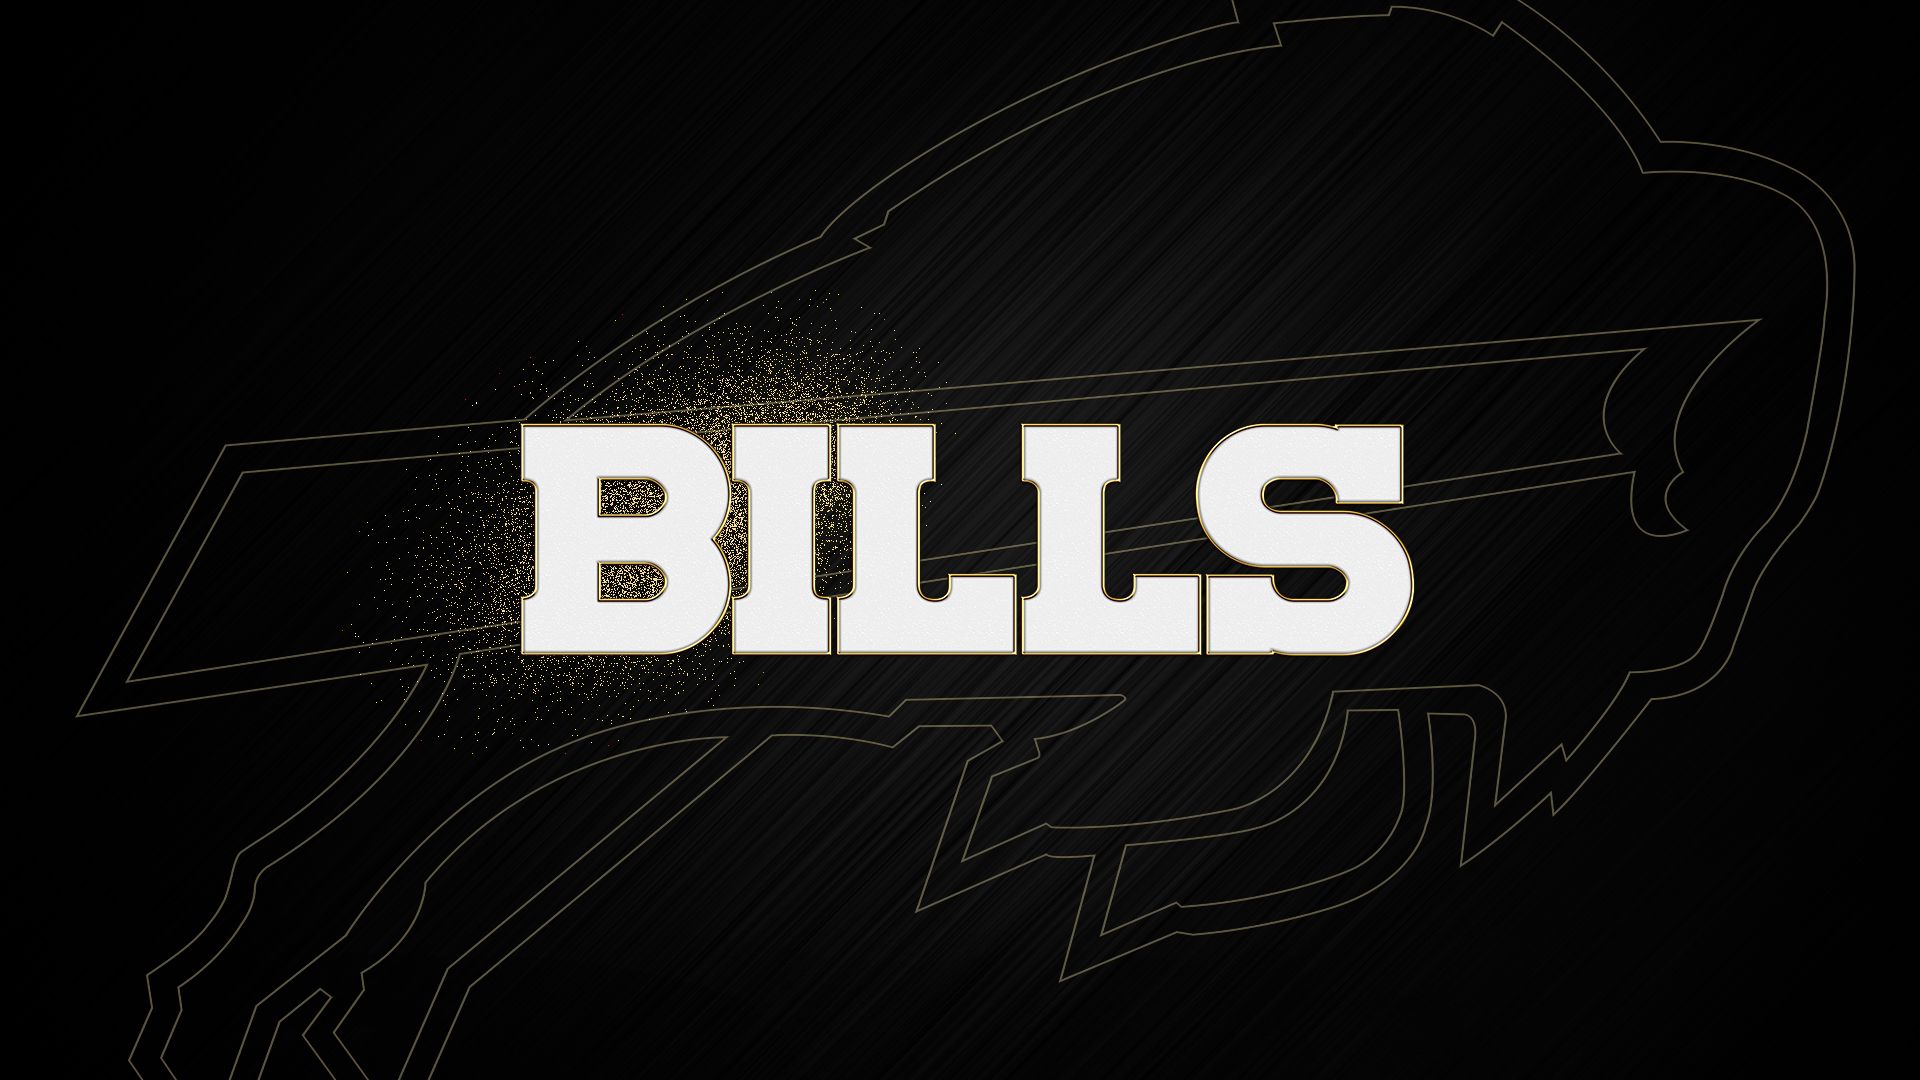 Buffalo Bills | Bills - buffalobills.com